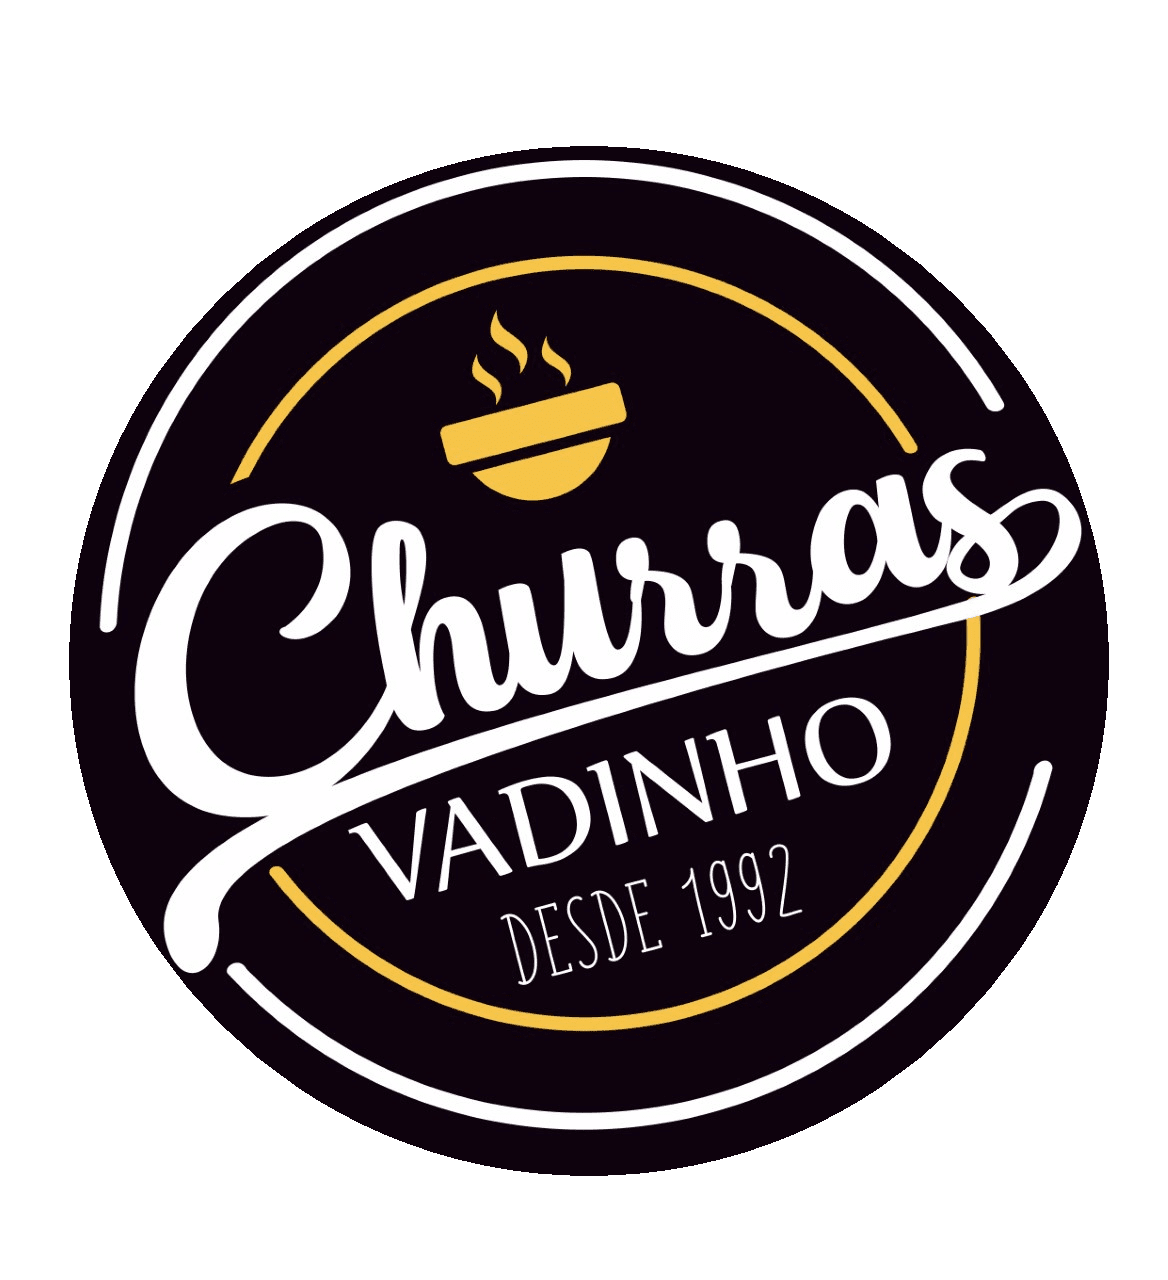 Churras Vadinho